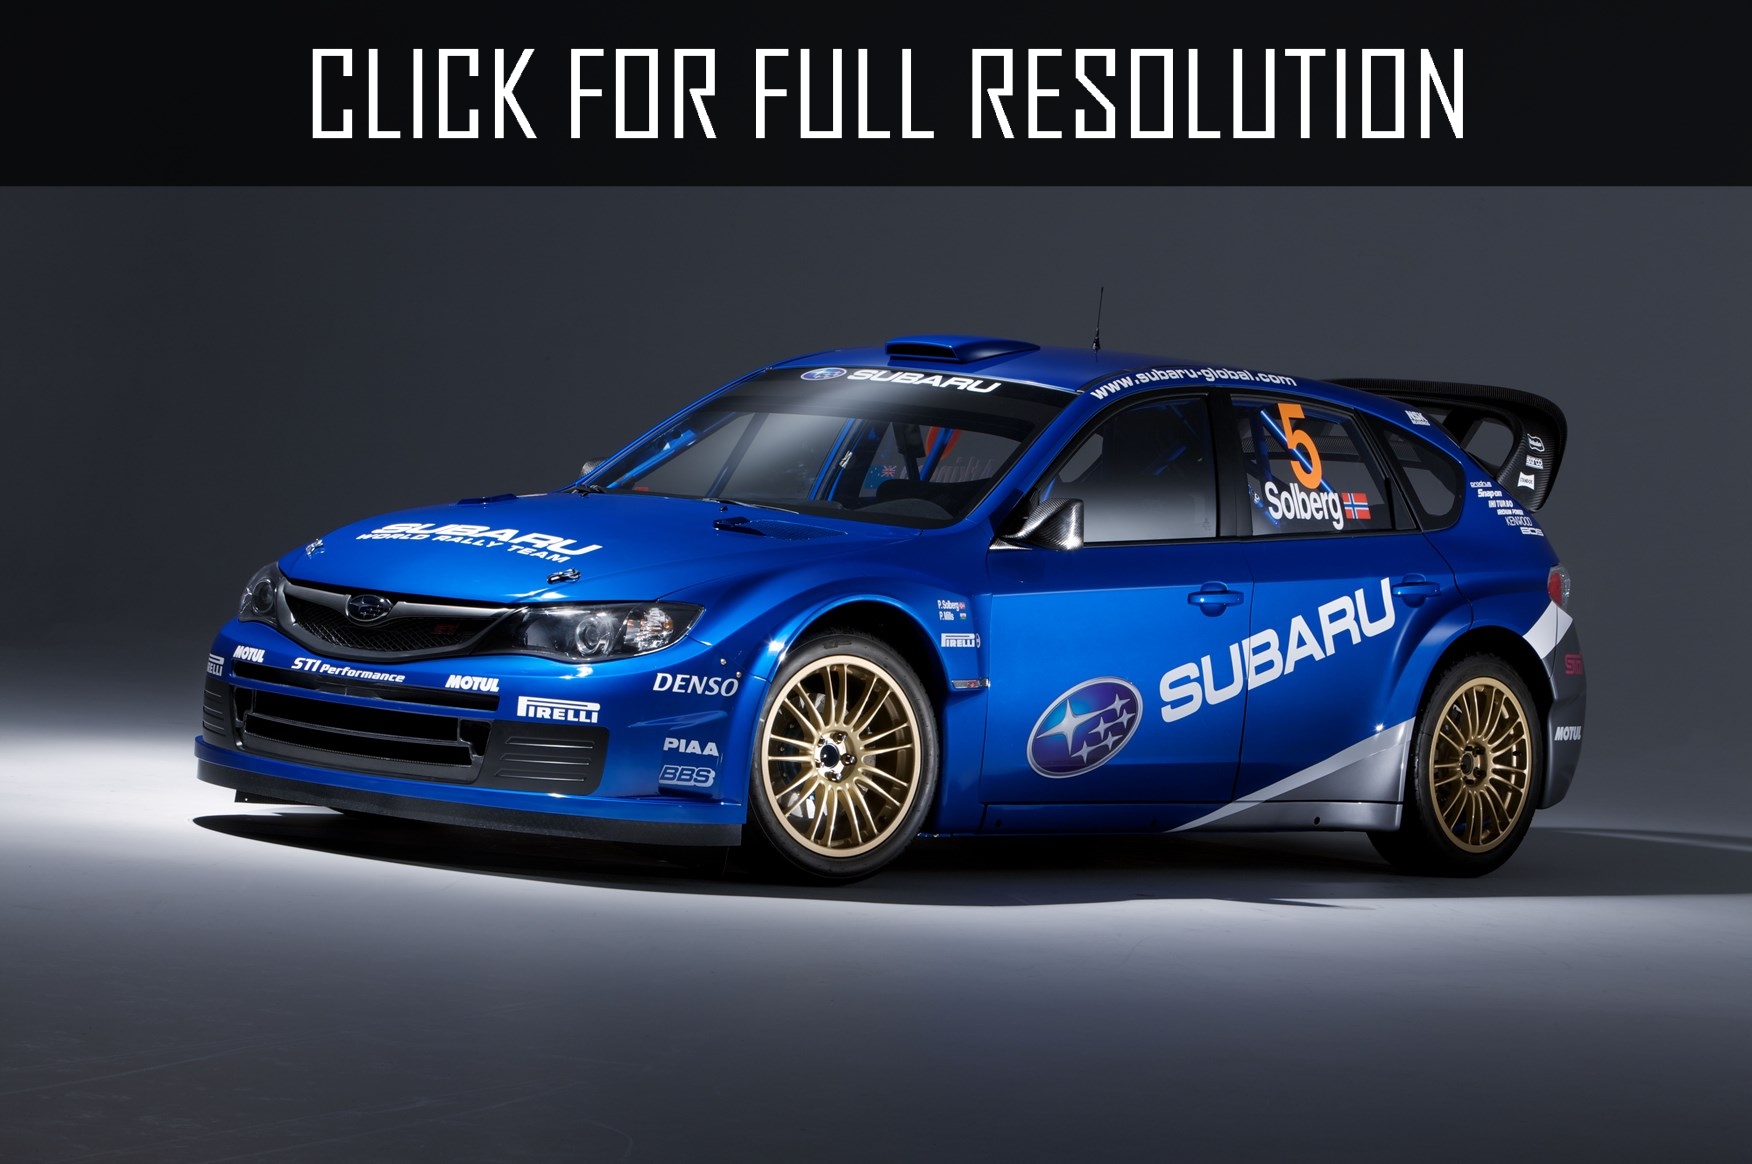 Subaru Rally Car